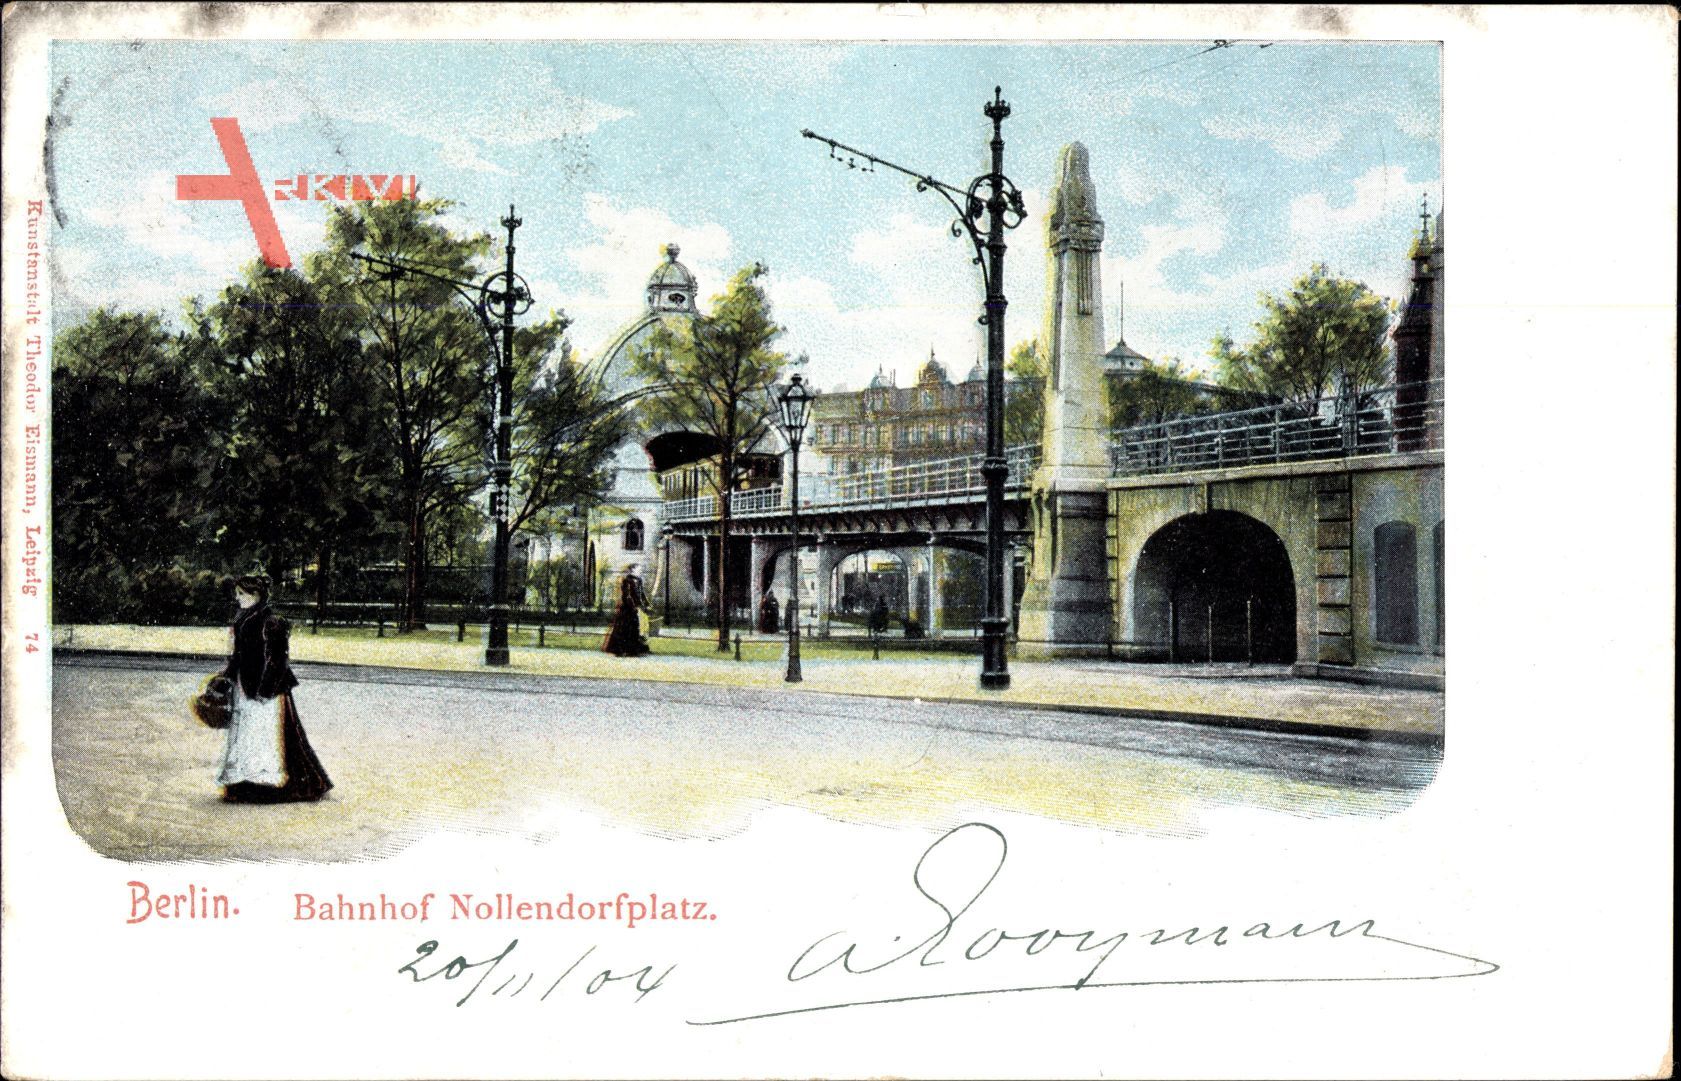 Berlin Schöneberg, Blick auf den Bahnhof Nollendorfplatz